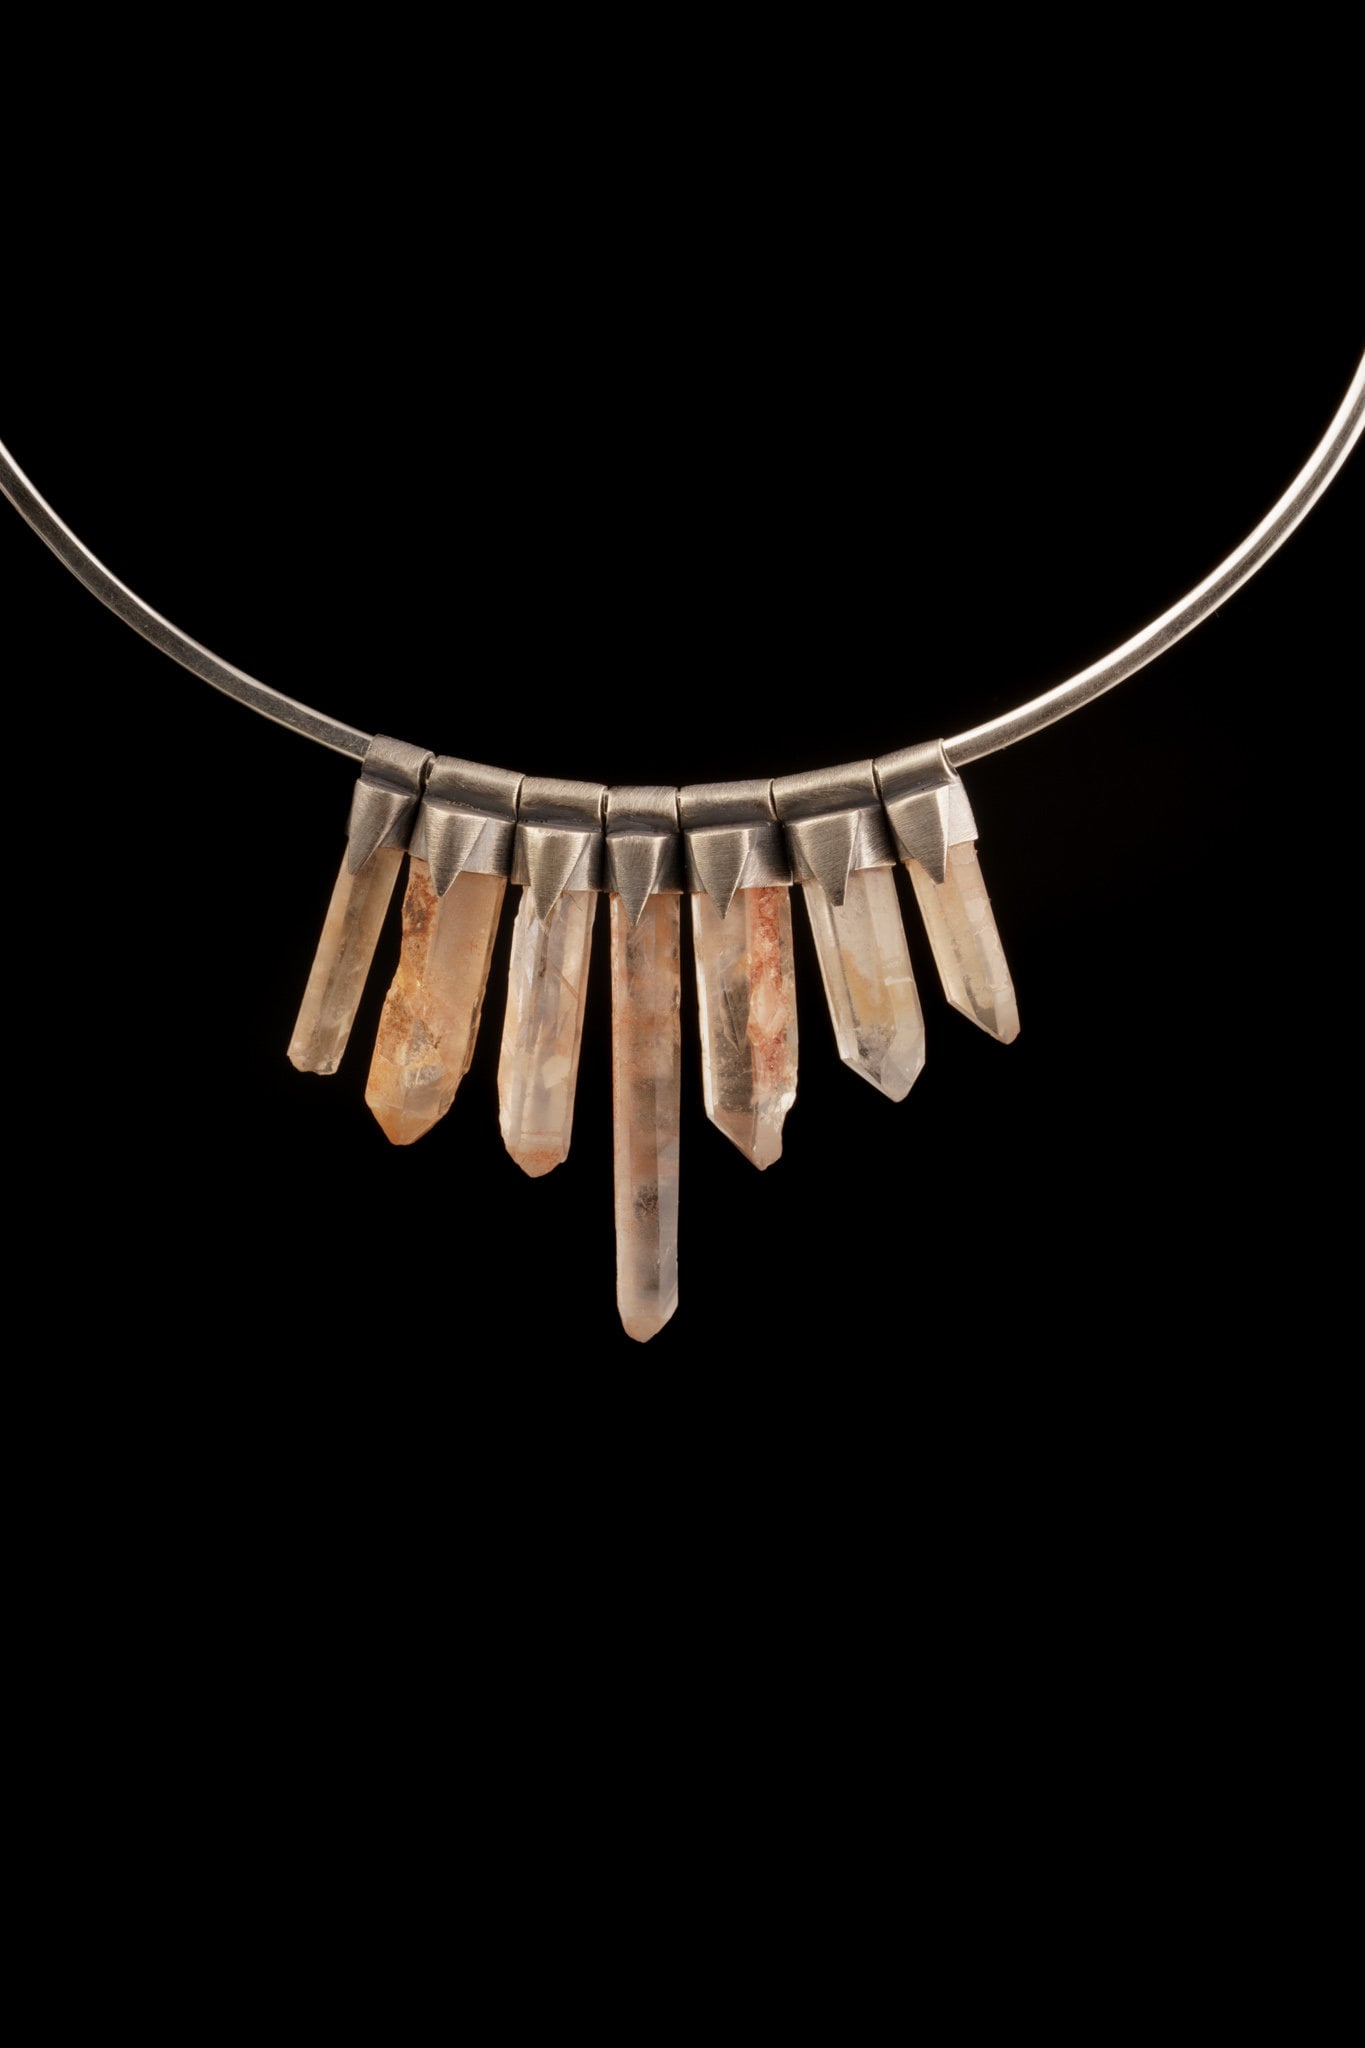 Gemmy Olive Brown Black Tourmaline - Stack Pendant textured & oxidised - 925 sterling silver - Crystal Necklace